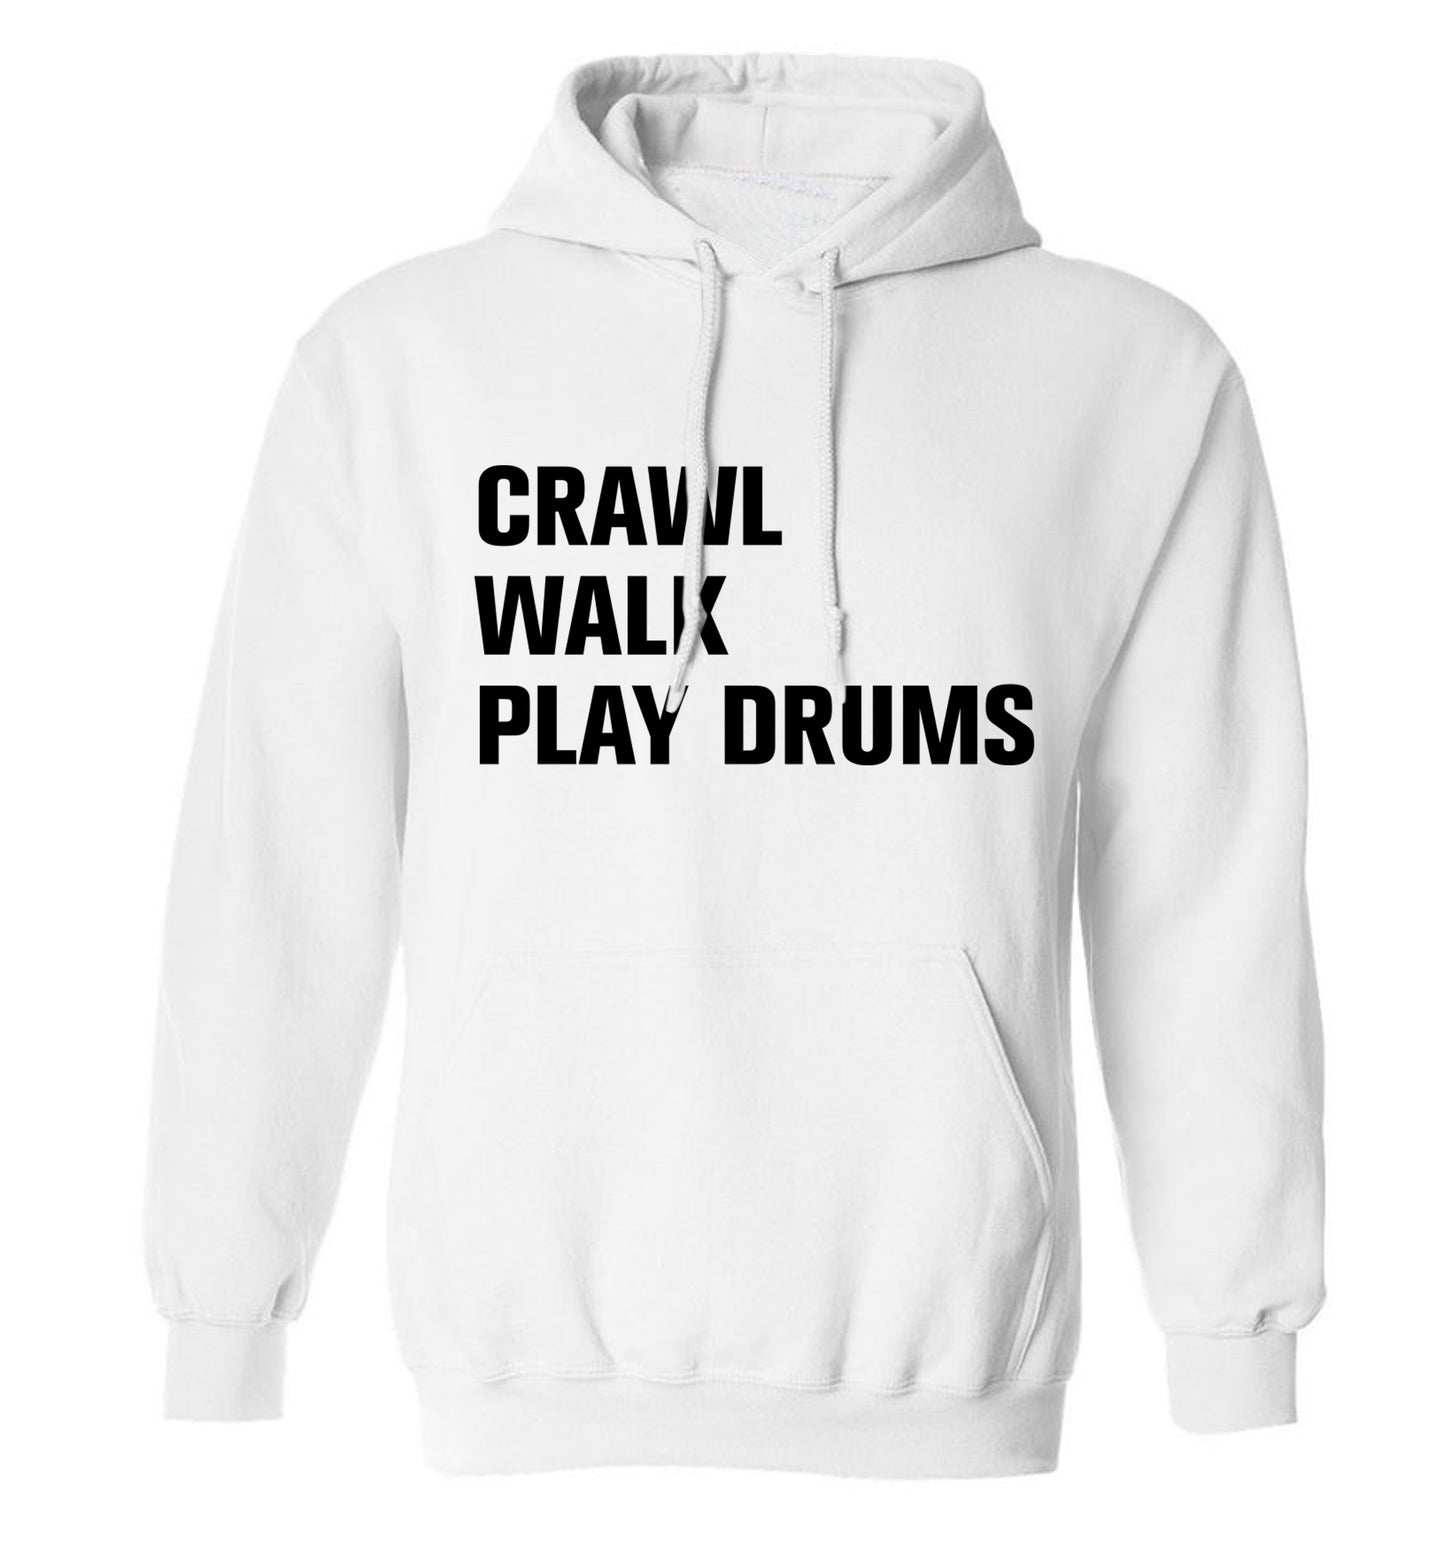 Crawl walk play drums adults unisex white hoodie 2XL